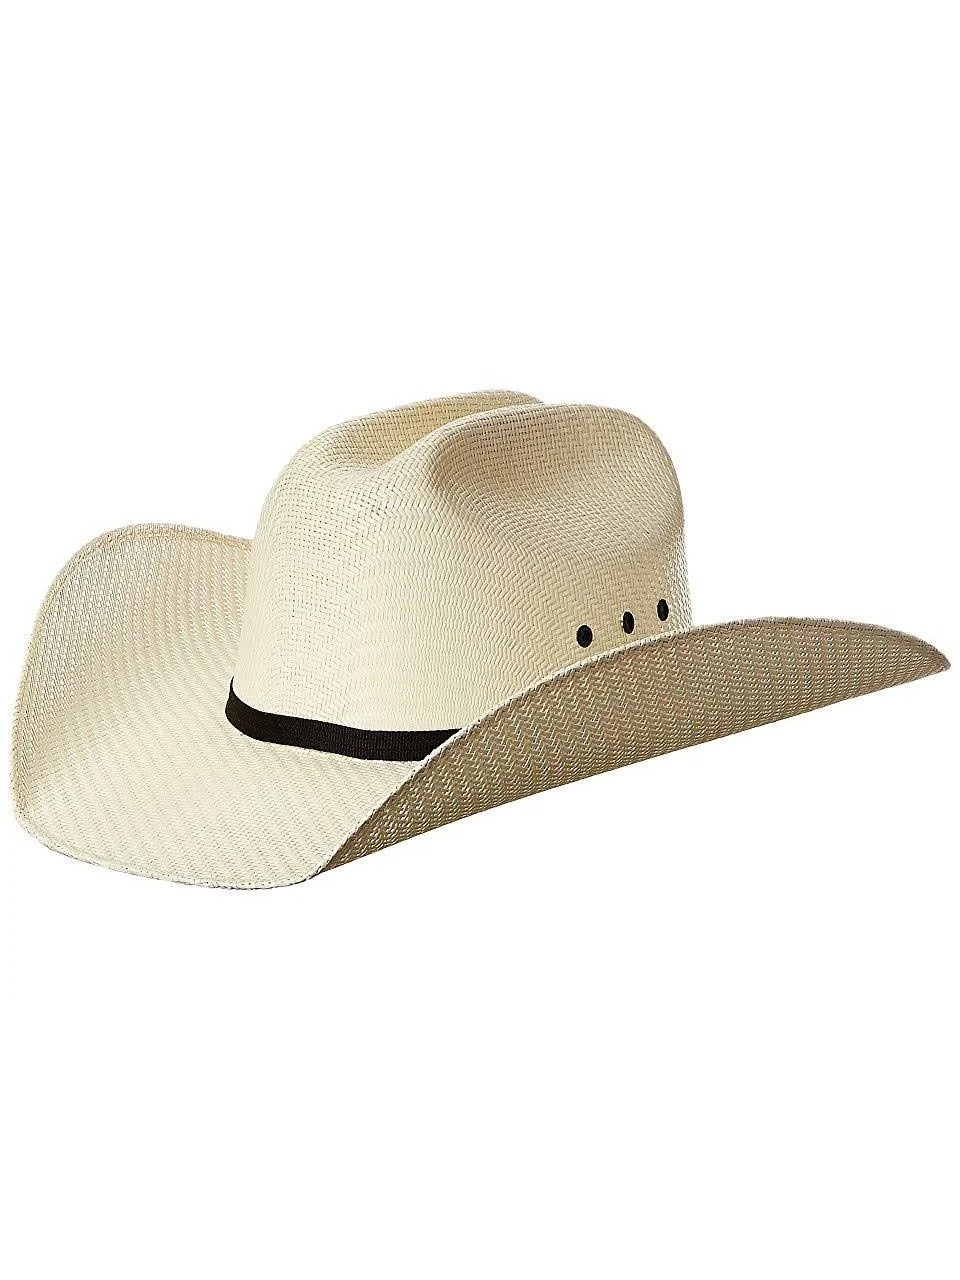 Girls Pink Ombre Bangora Western Cattleman Straw Cowgirl Cowboy Hat Kids Size 